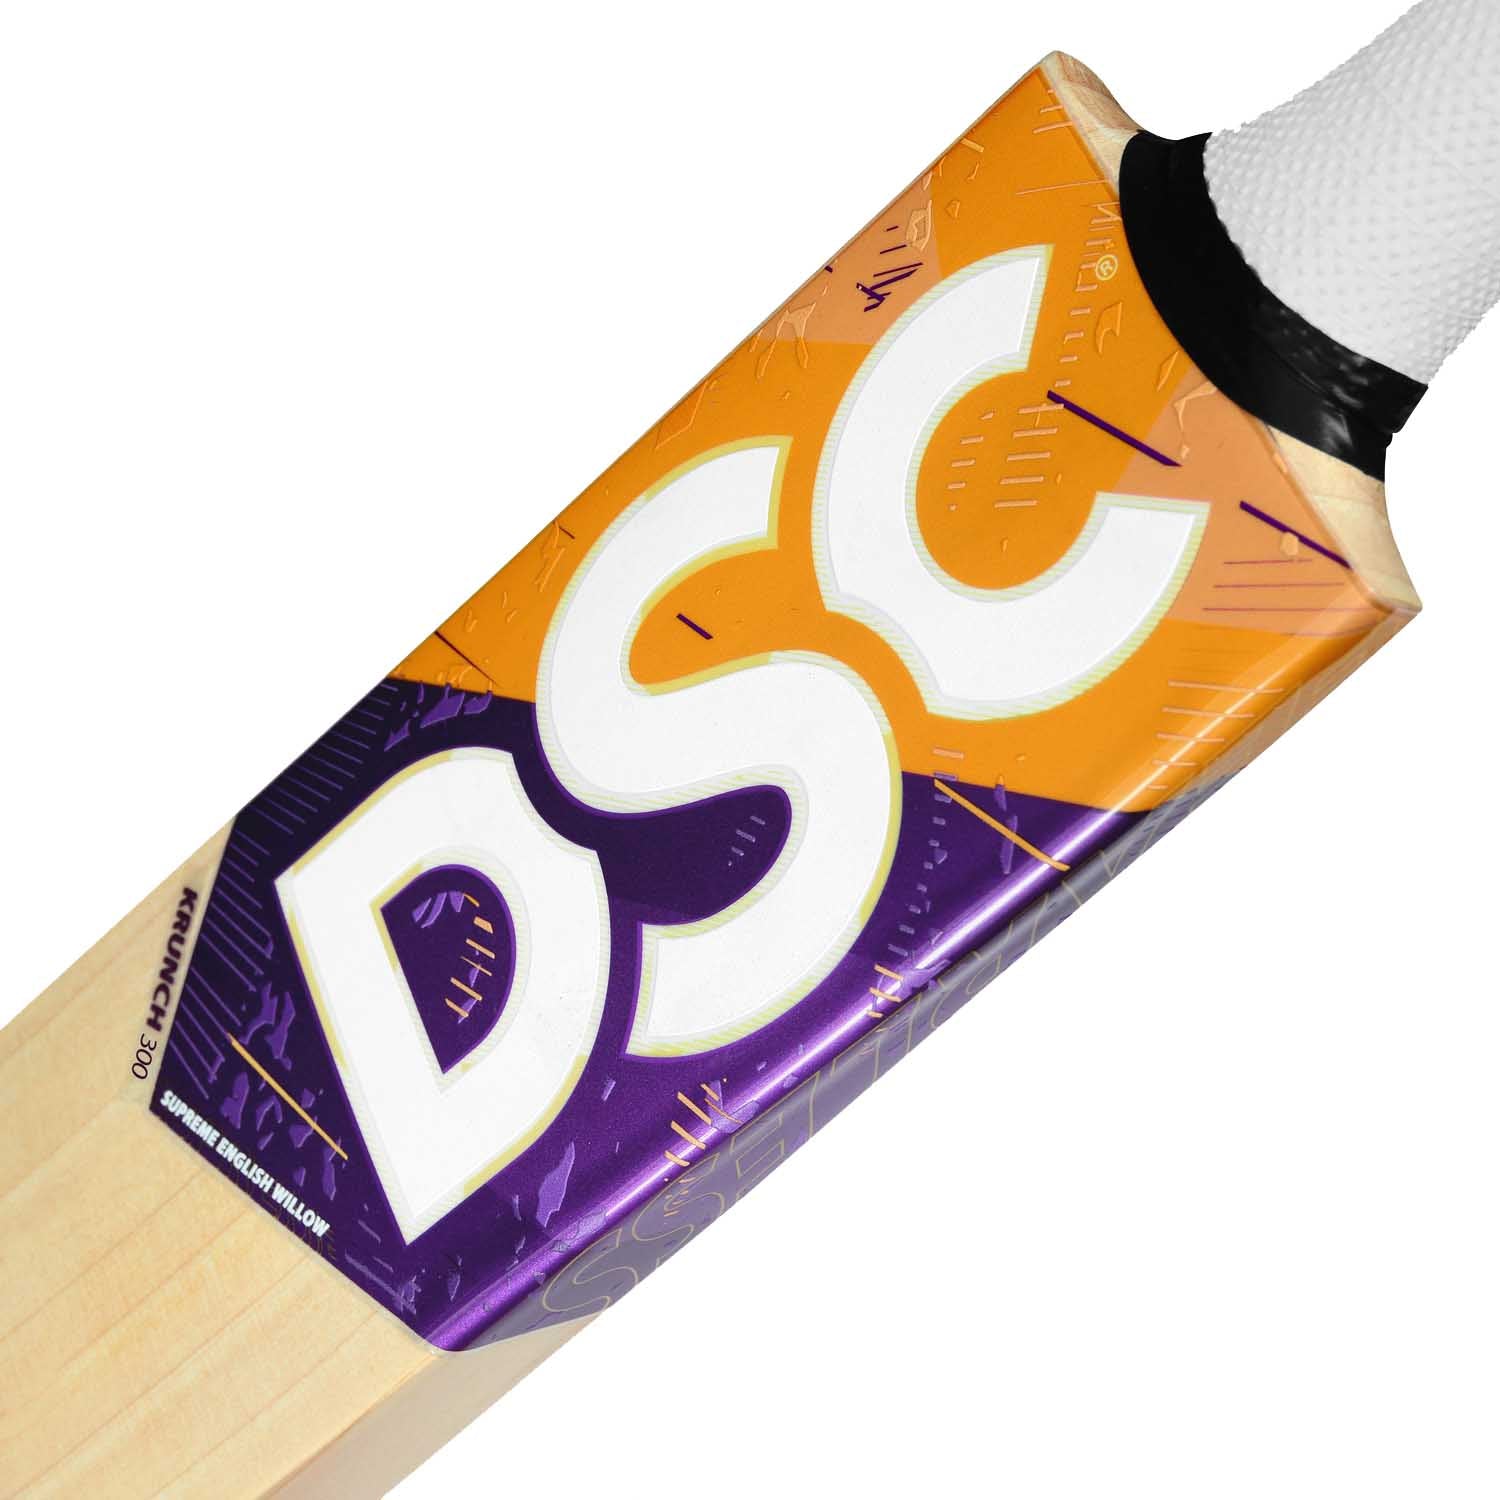 DSC Krunch 300 English Senior English Willow Cricket bat